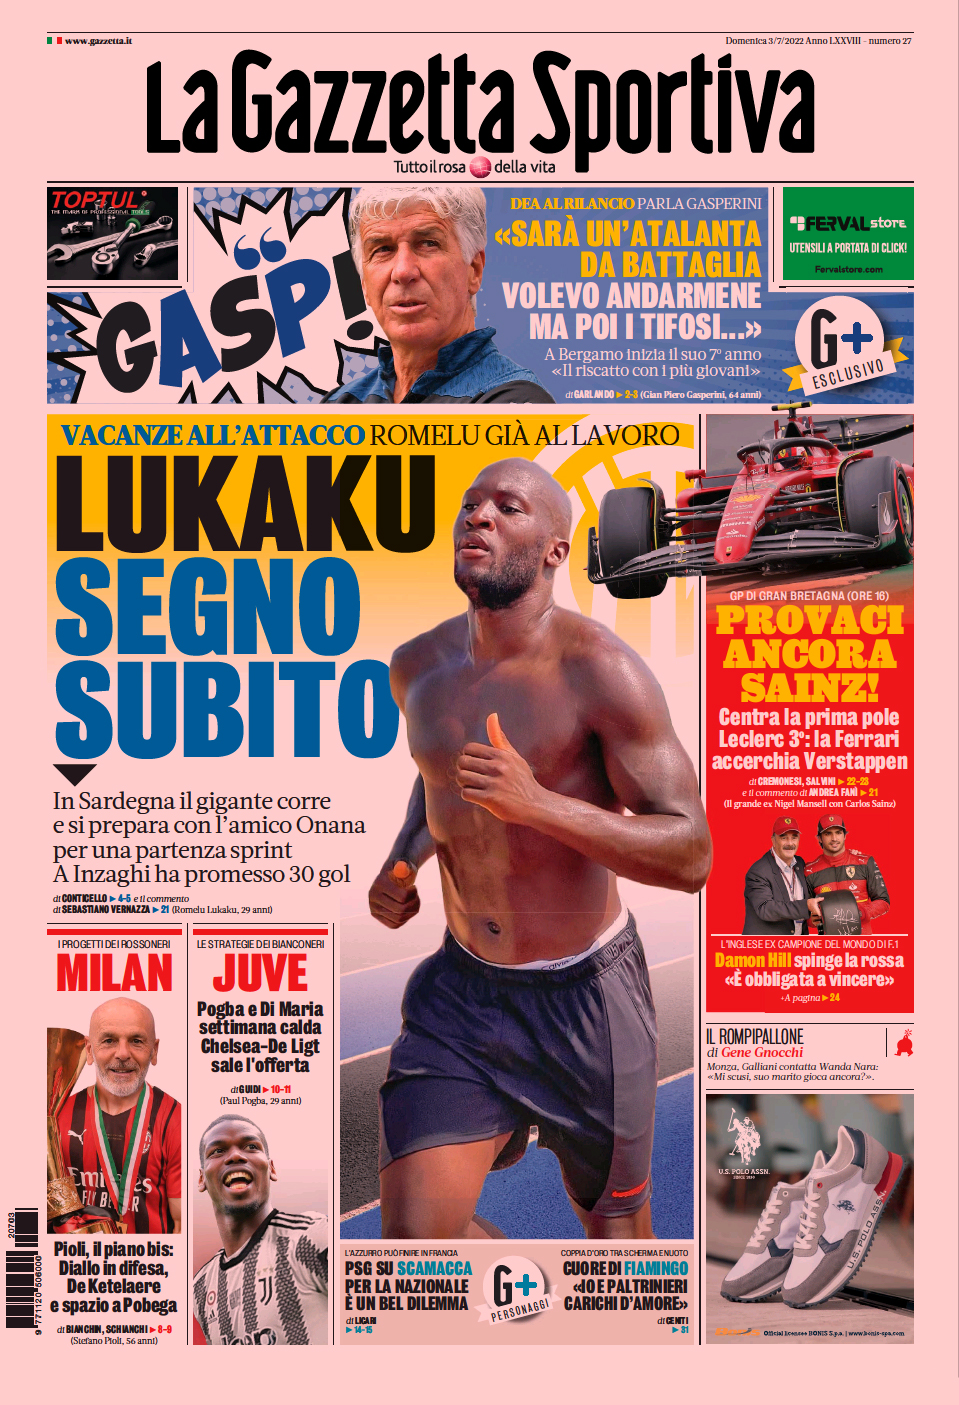 Лукаку сразу забивает. Заголовки Gazzetta, TuttoSport и Corriere за 3 июля